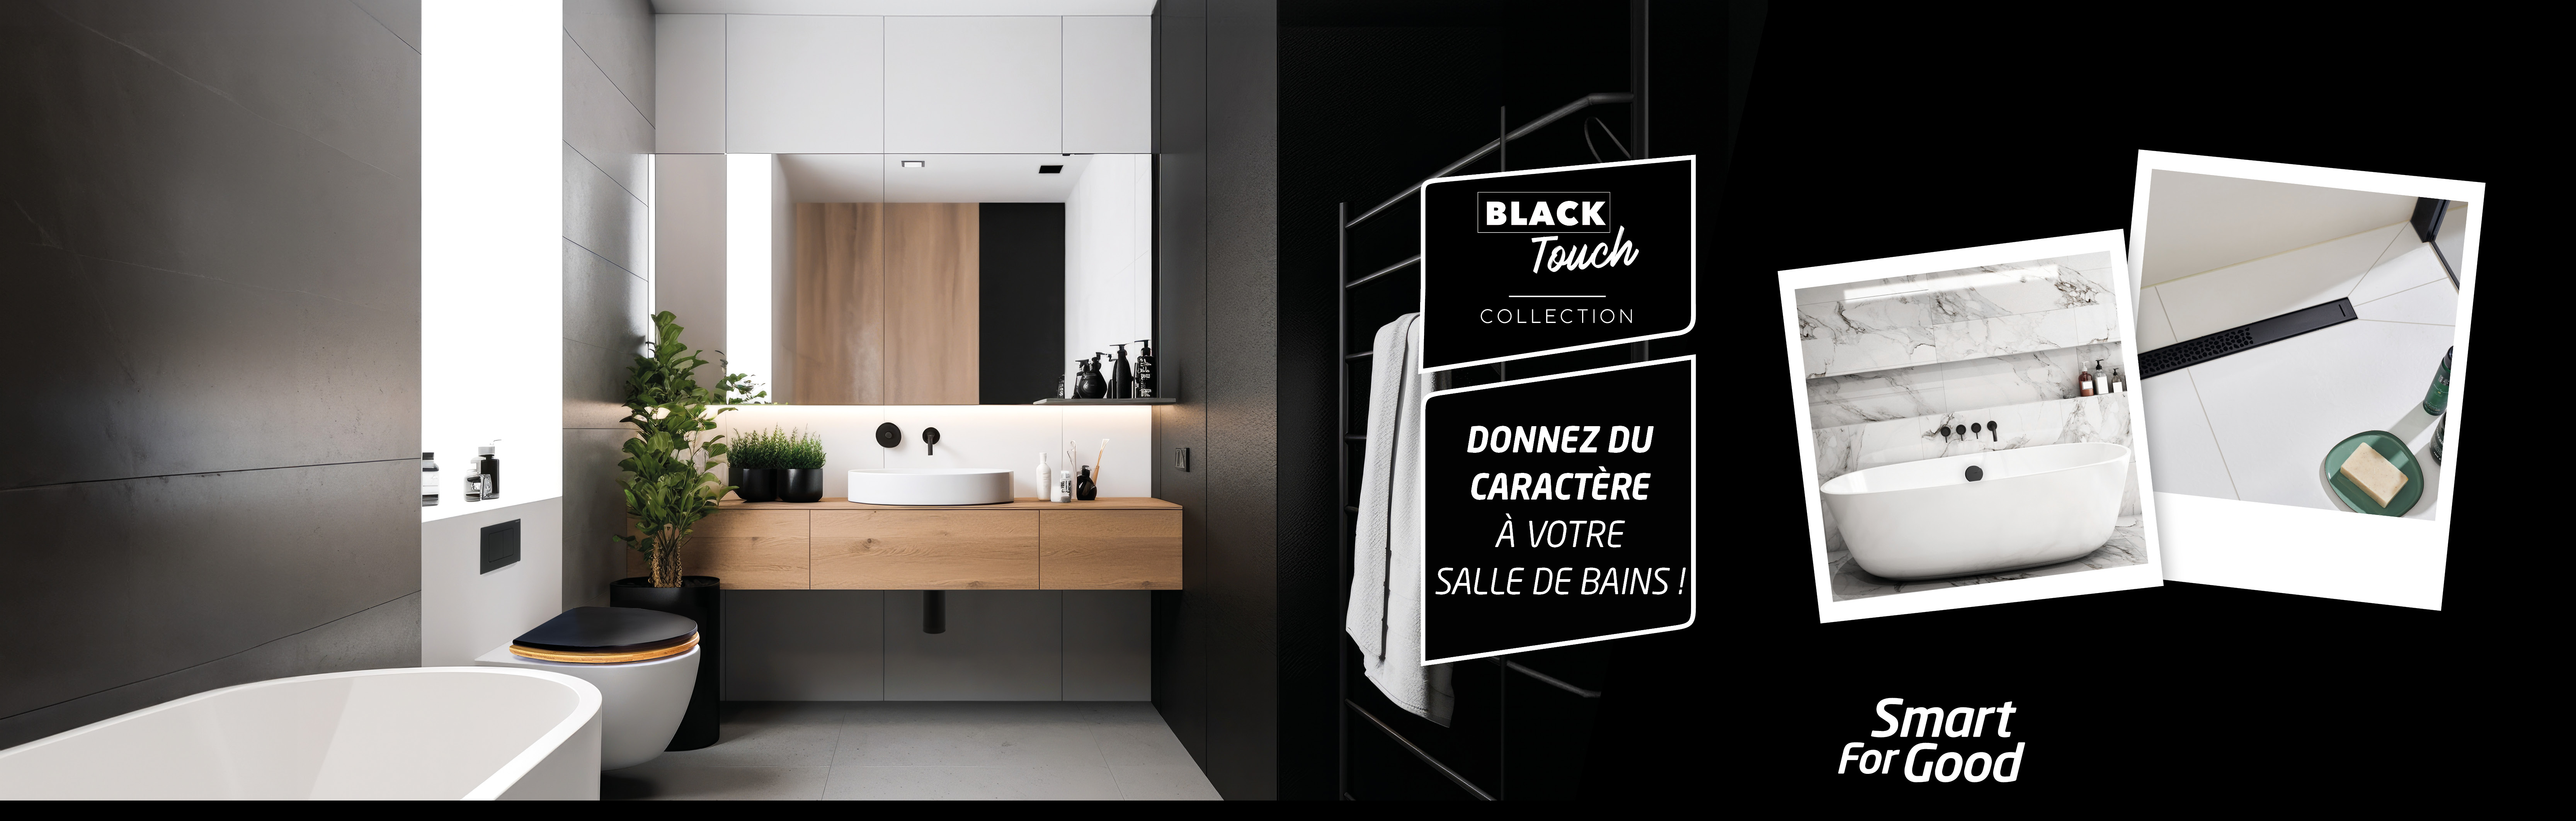 black_touch_banniere